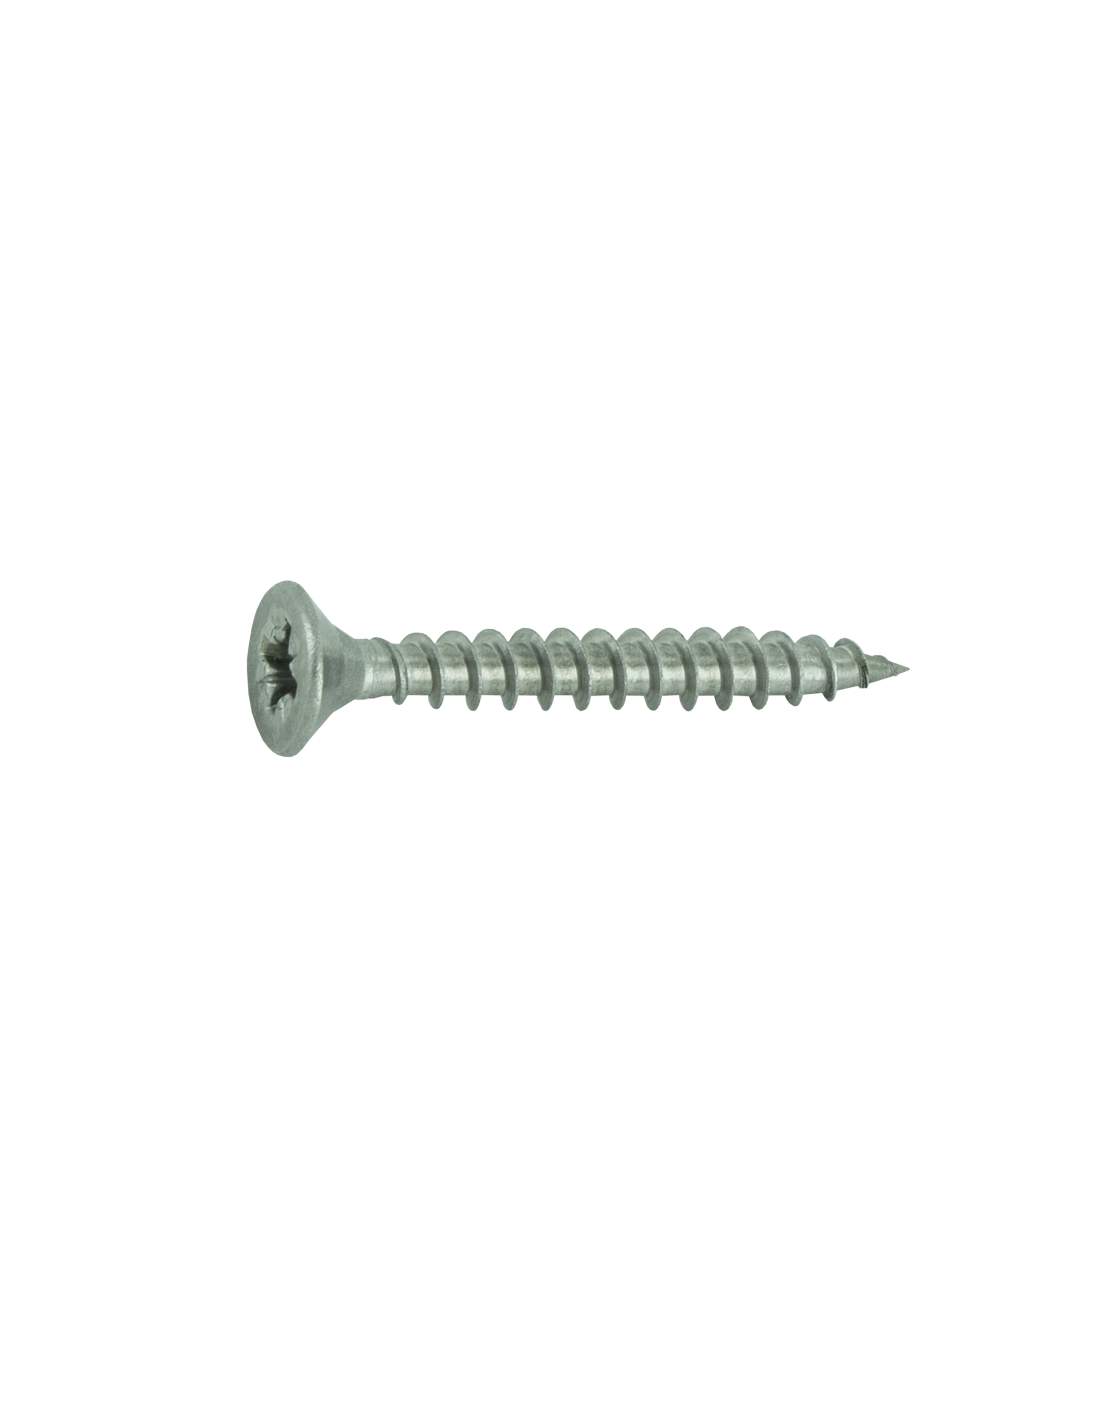 Pozidriv countersunk stainless steel screws A2 3x12, 45 pcs.